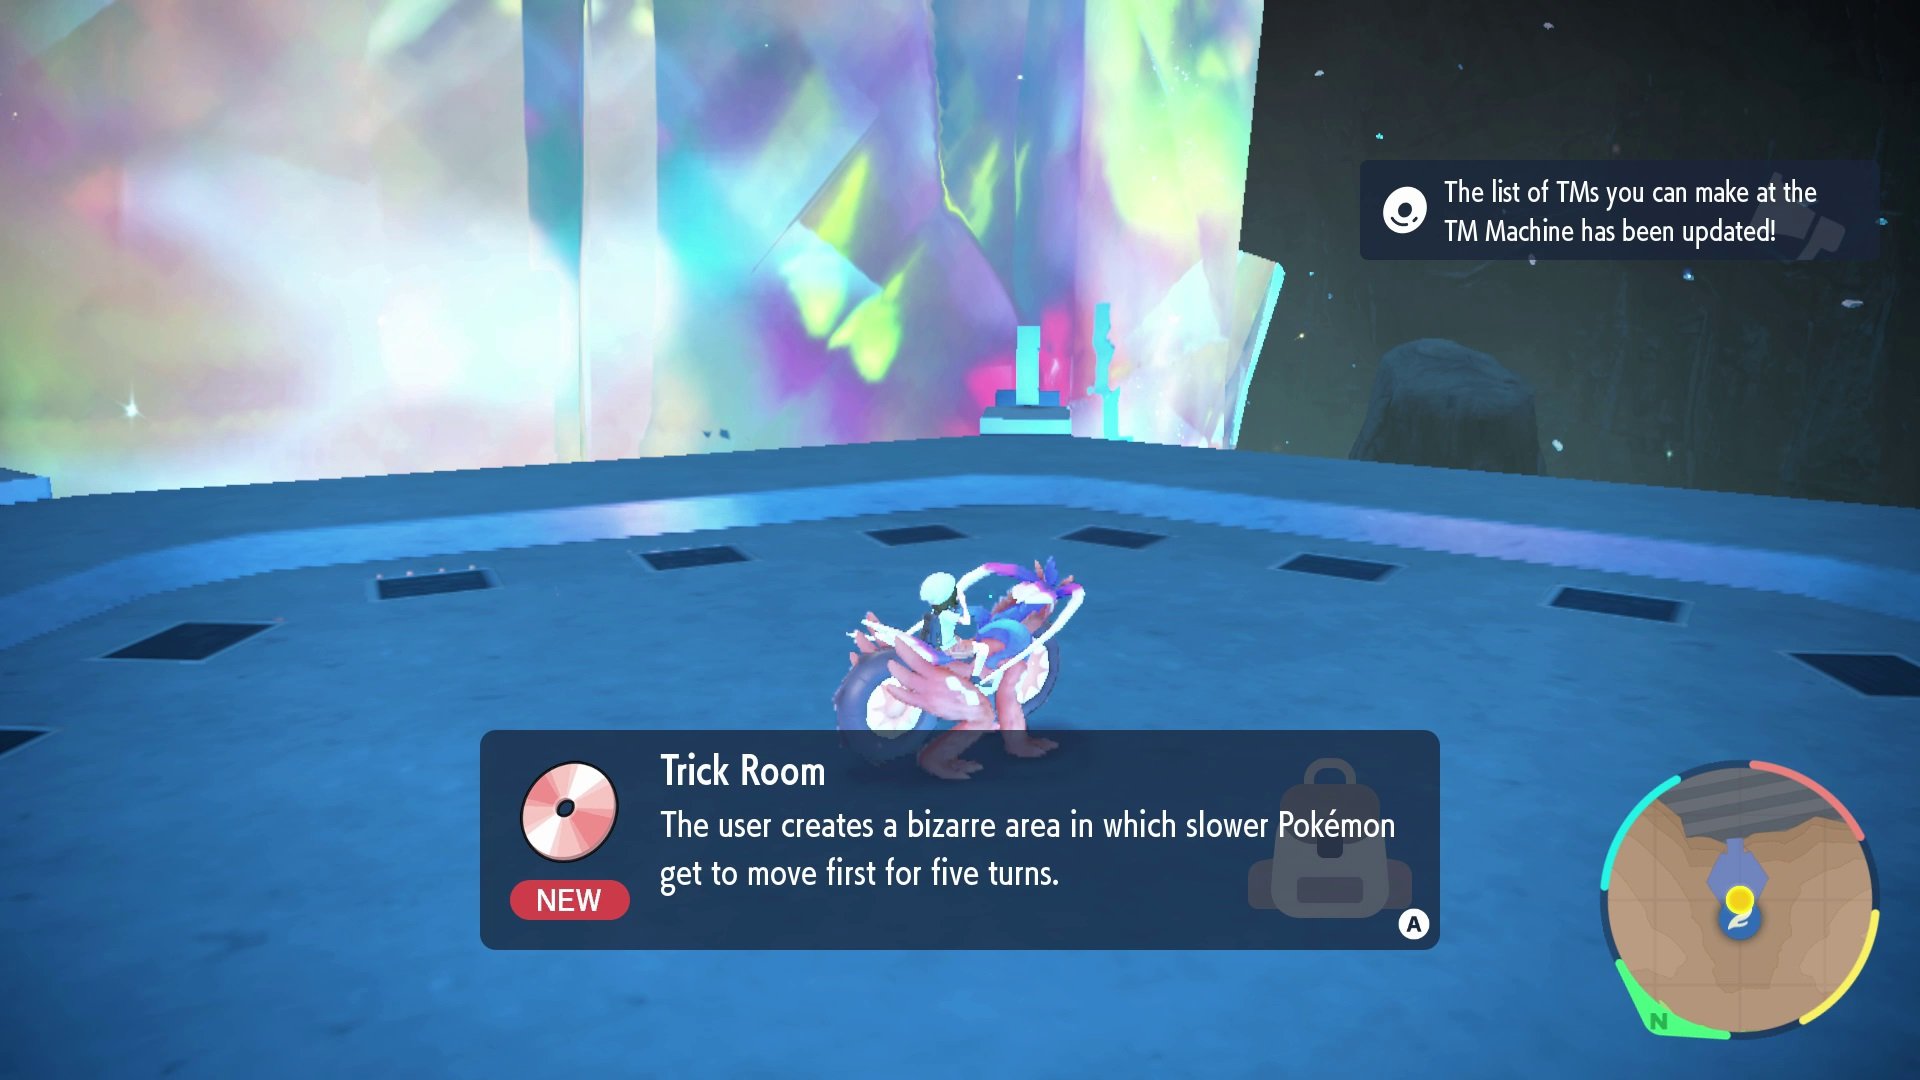 Trick Room TM location near Zero Lab in Pokémon Scarlet and Violet